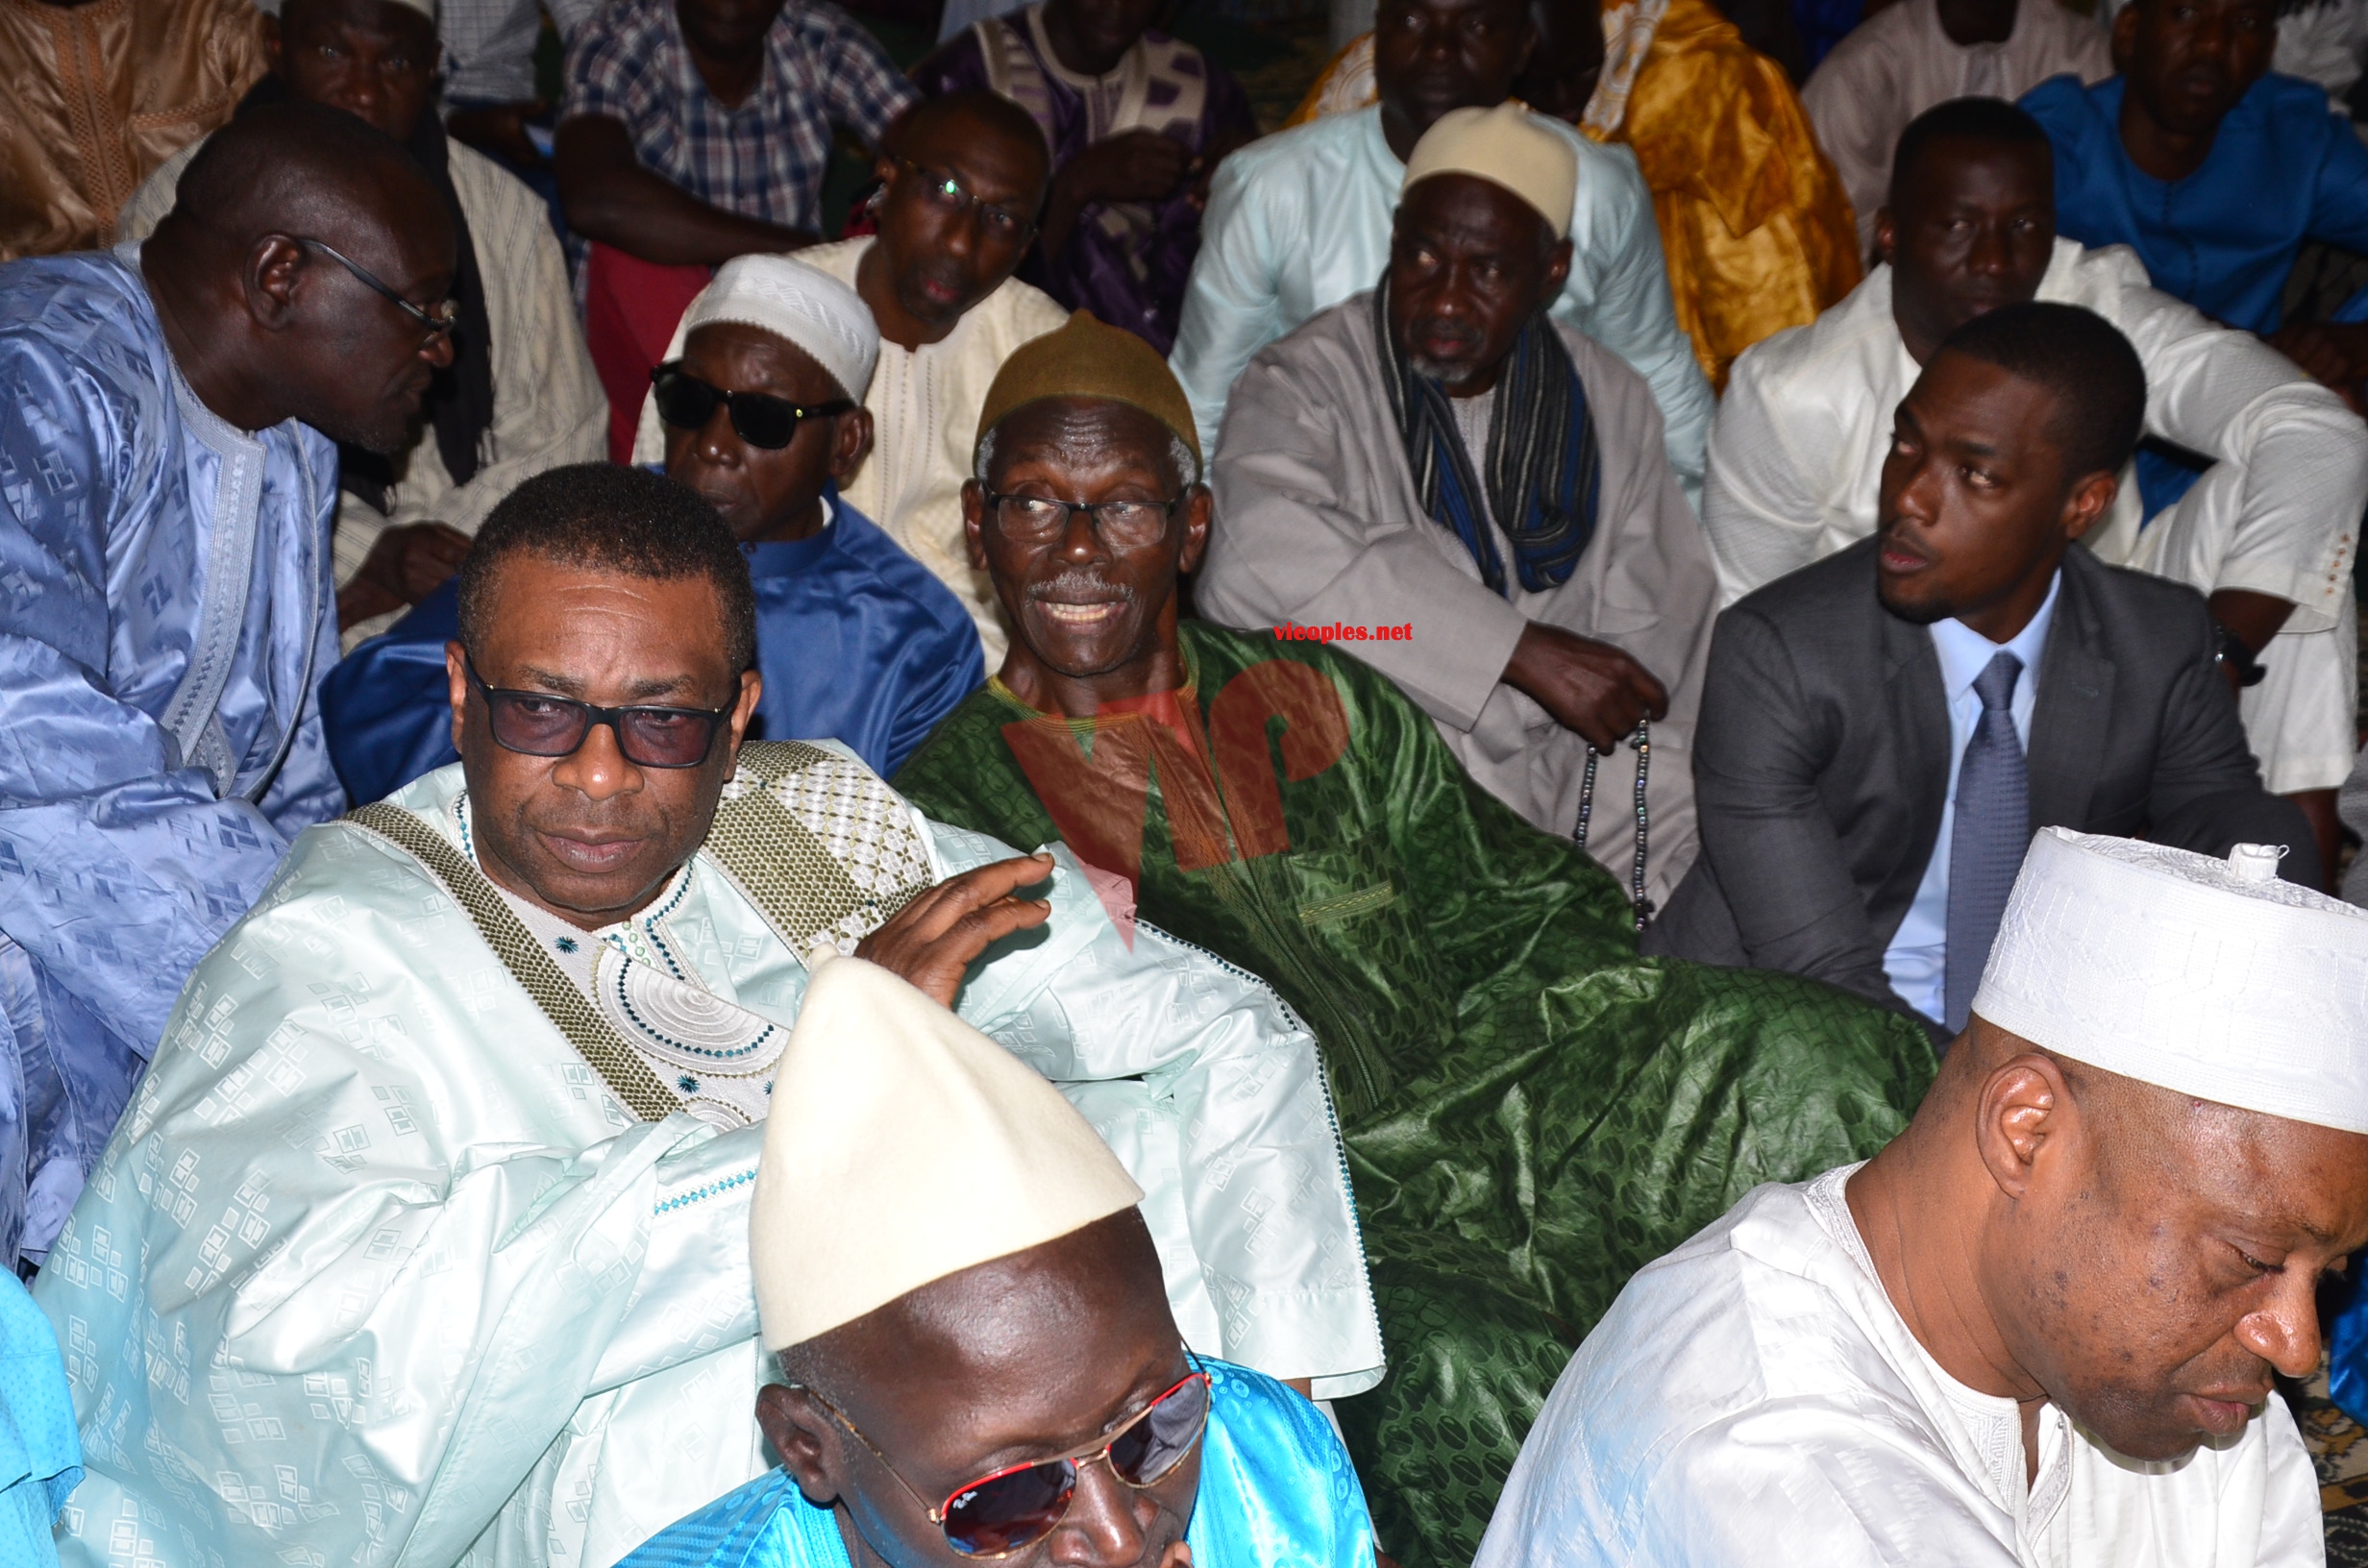 Mariage de Kouthia: Youssou Ndour était au » Takk »